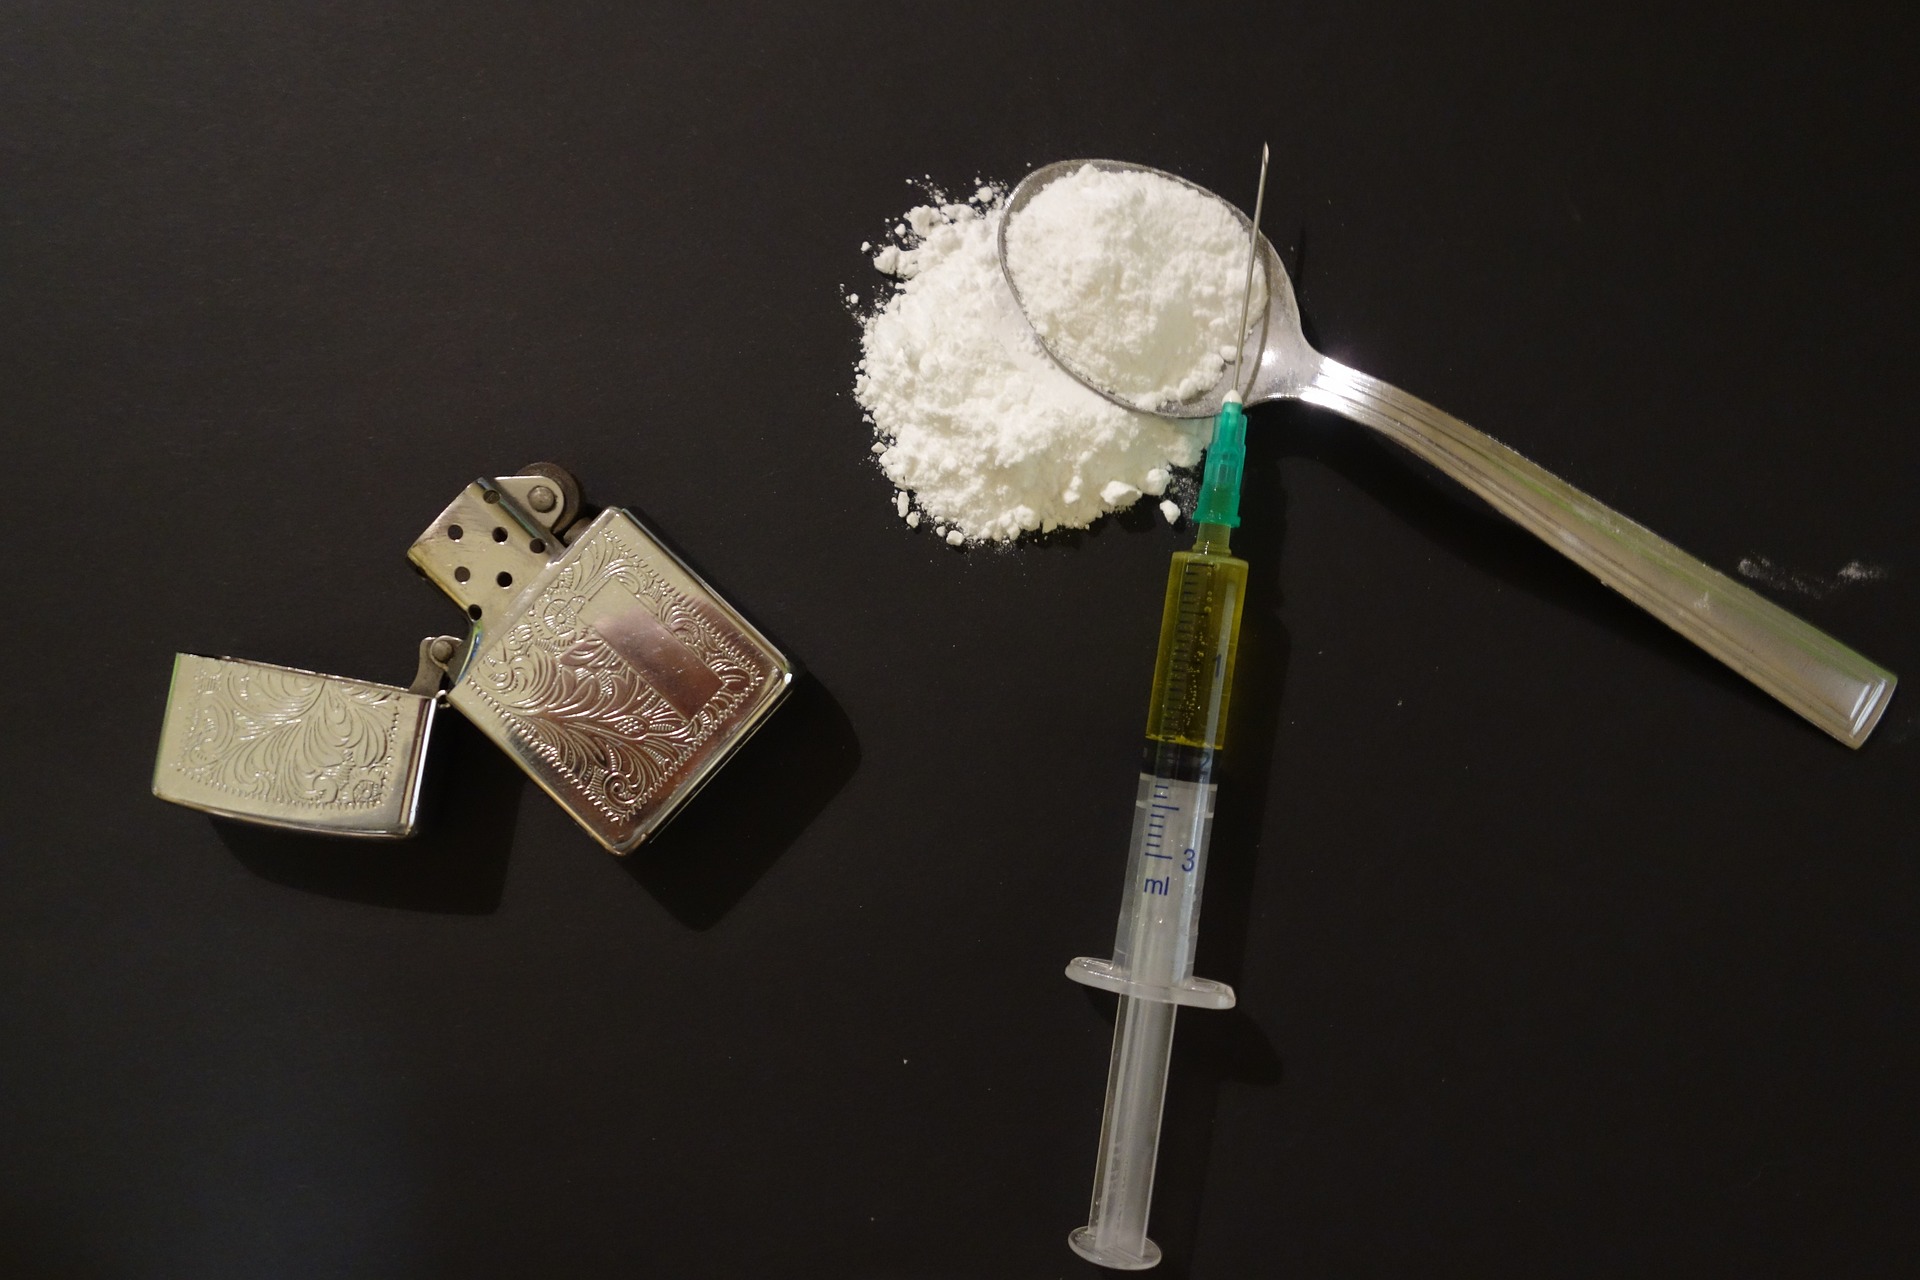 Image of drugs on a black background (Syringe, cocaine/heroin, ligther)